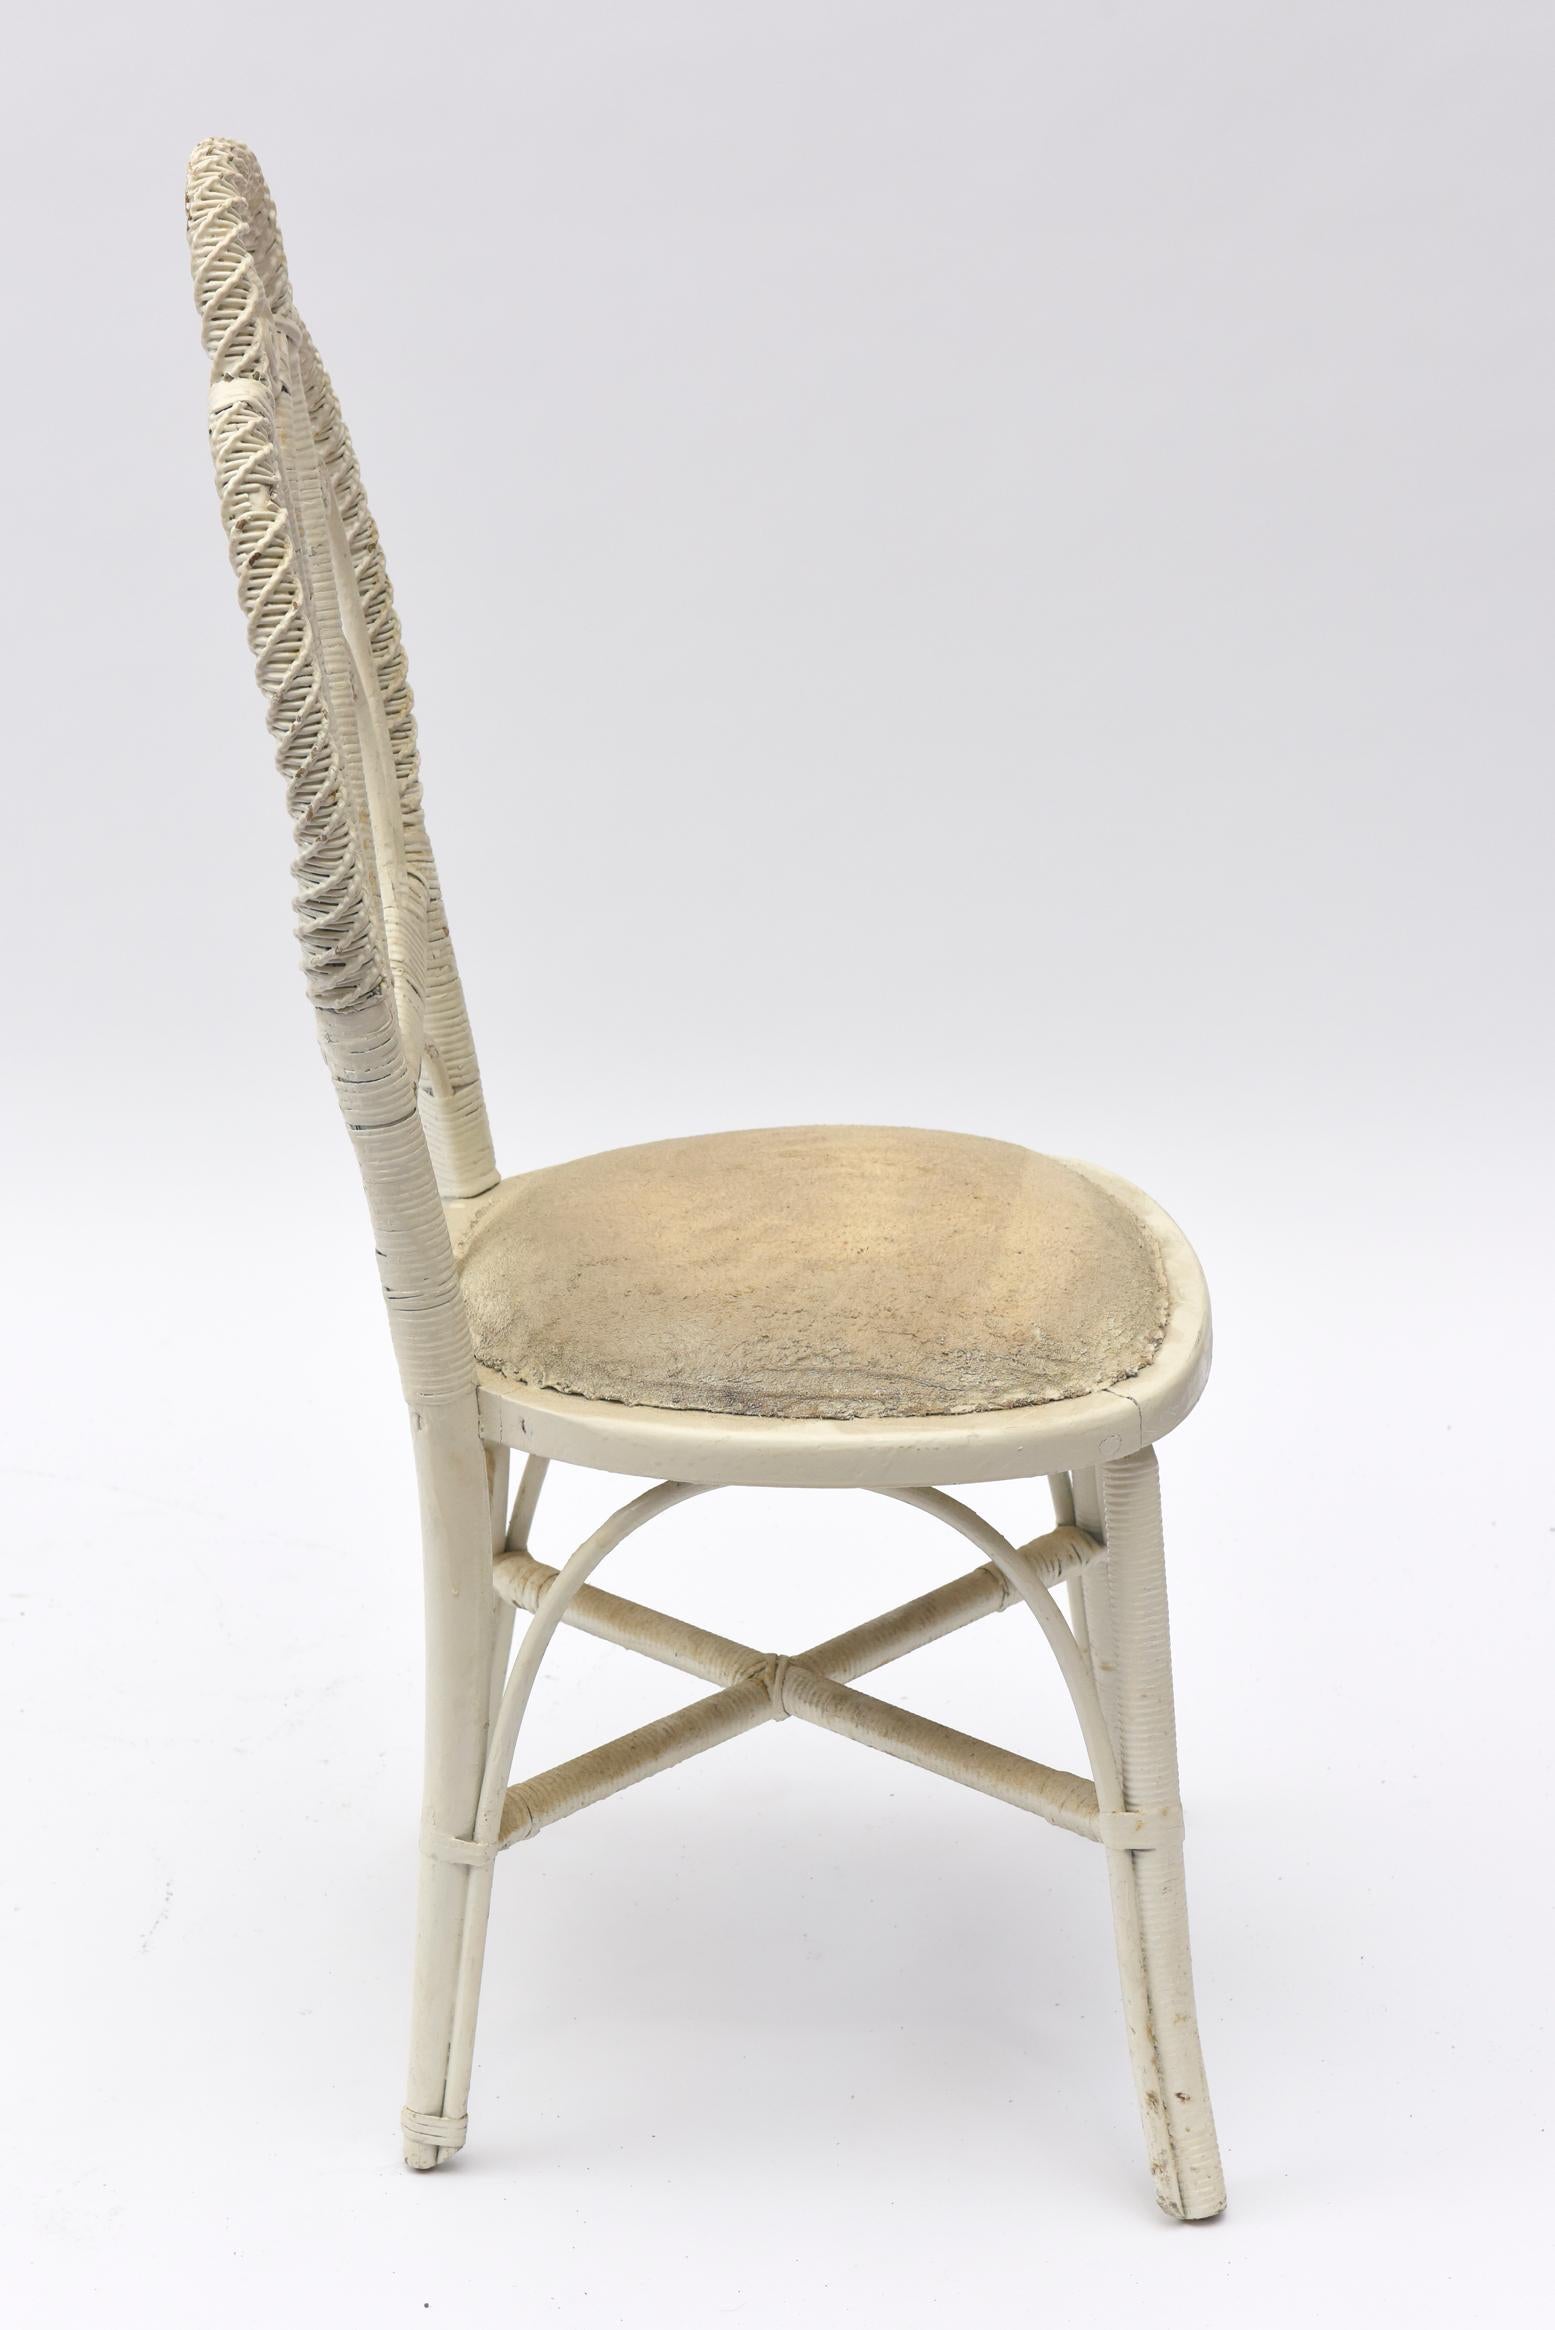 Victorian Antique Wicker Chair for Desk or Dresser